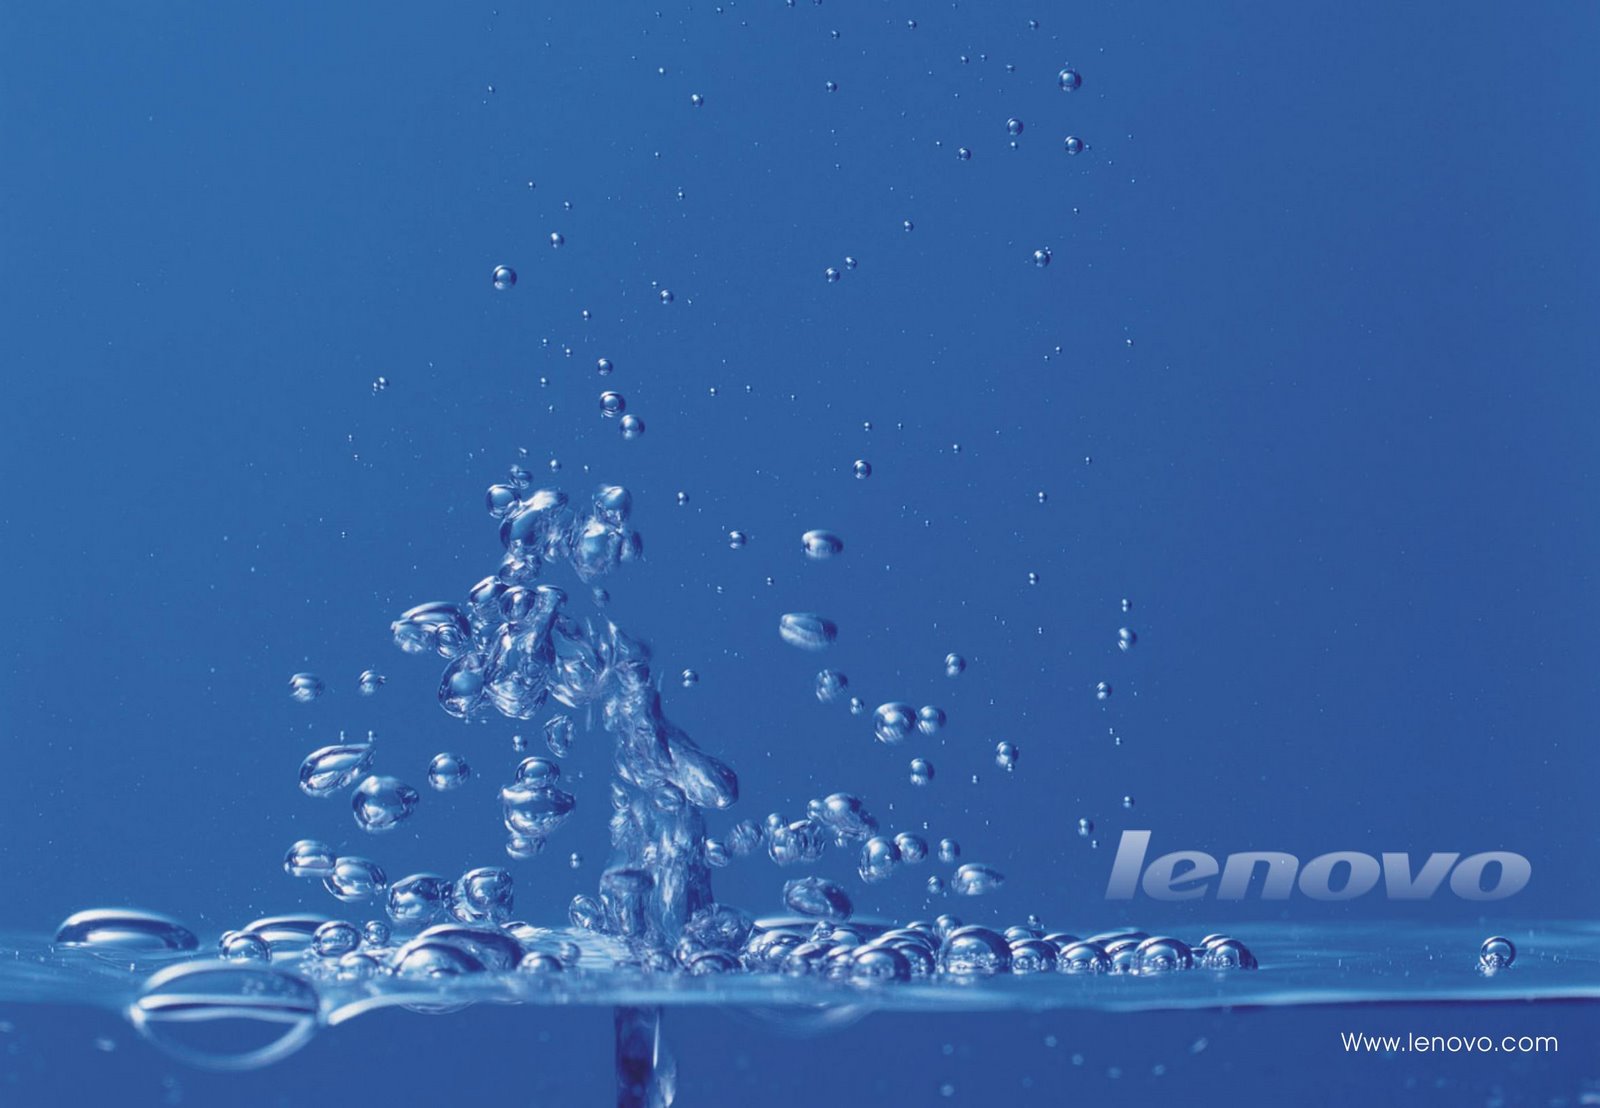 Lenovo Yoga Wallpaper Wallpapersafari